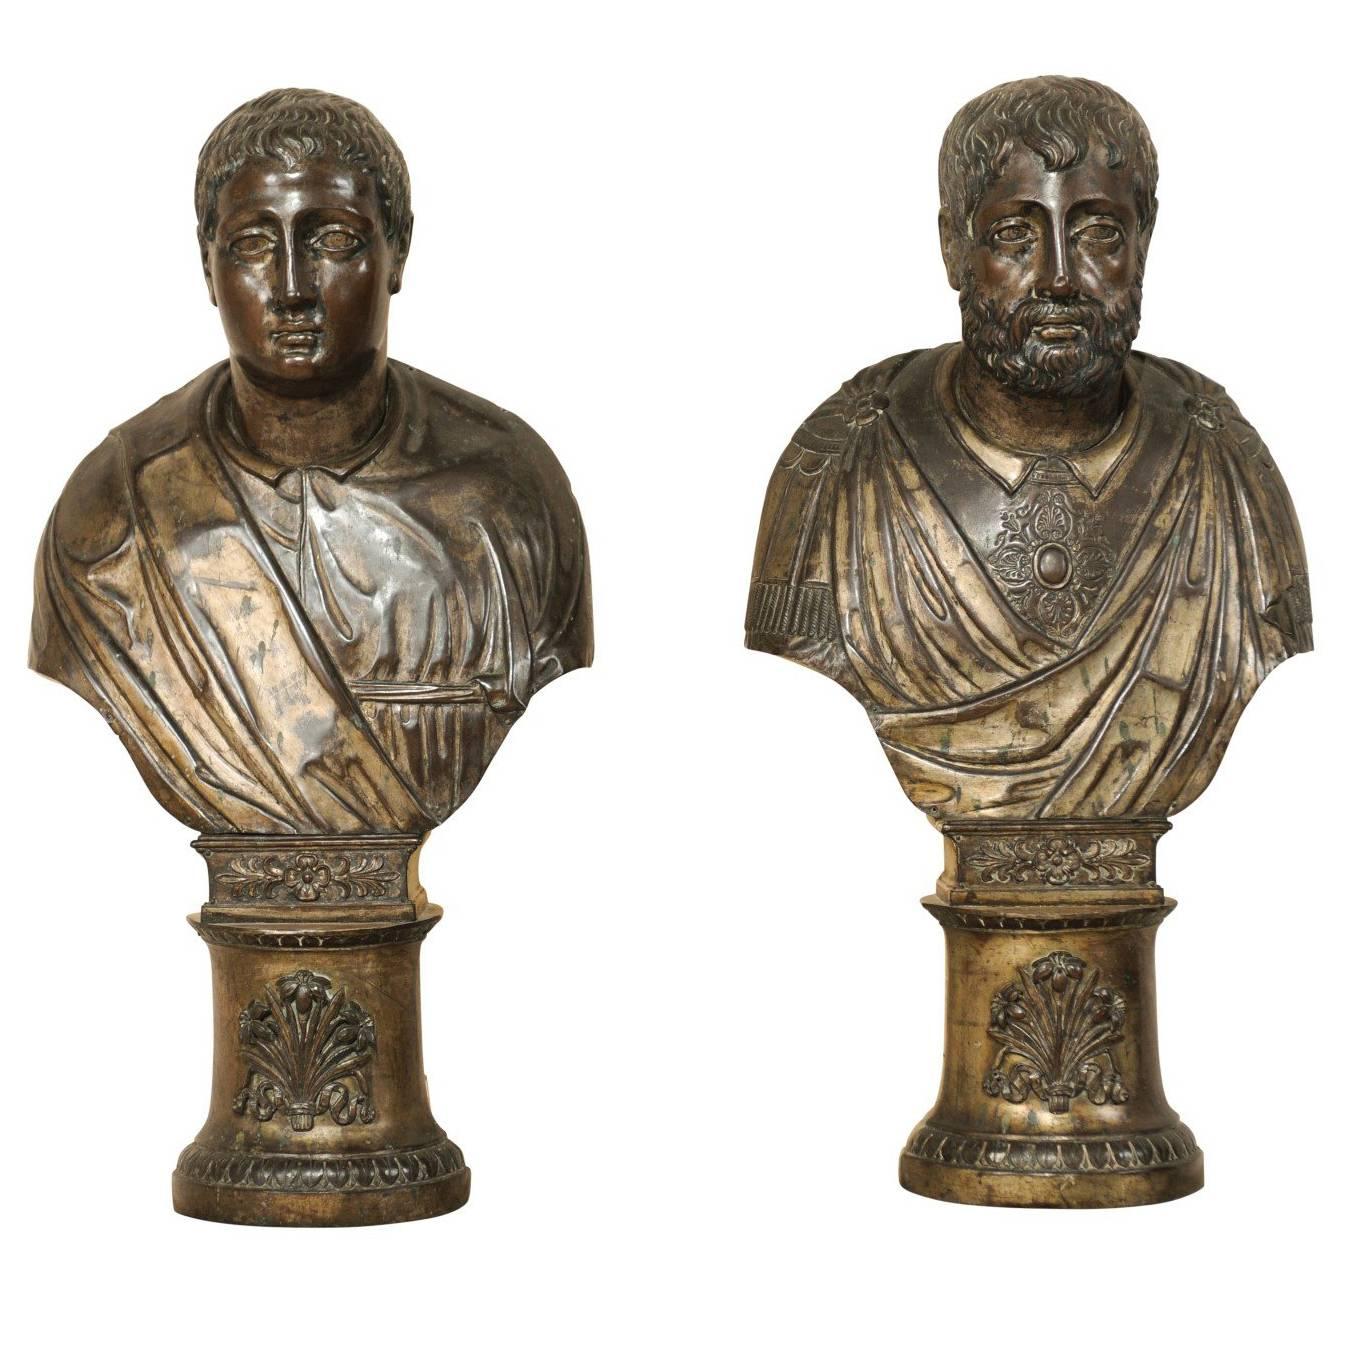 Pair of Italian 19th Century Roman Senator Busts of Repoussé Copper or Wood